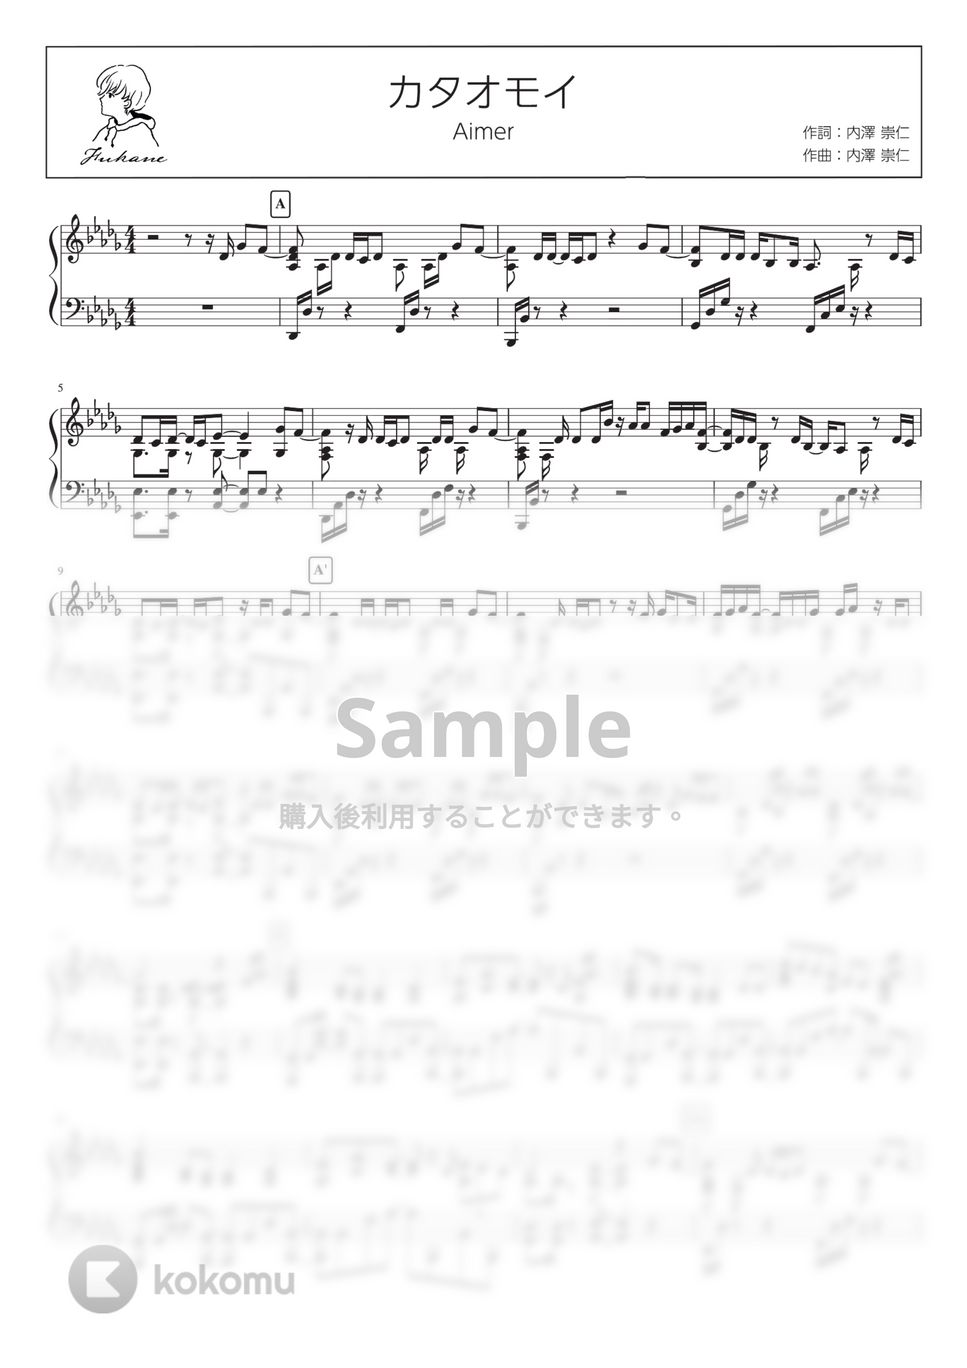 Aimer - カタオモイ (PianoSolo) by 深根 / Fukane